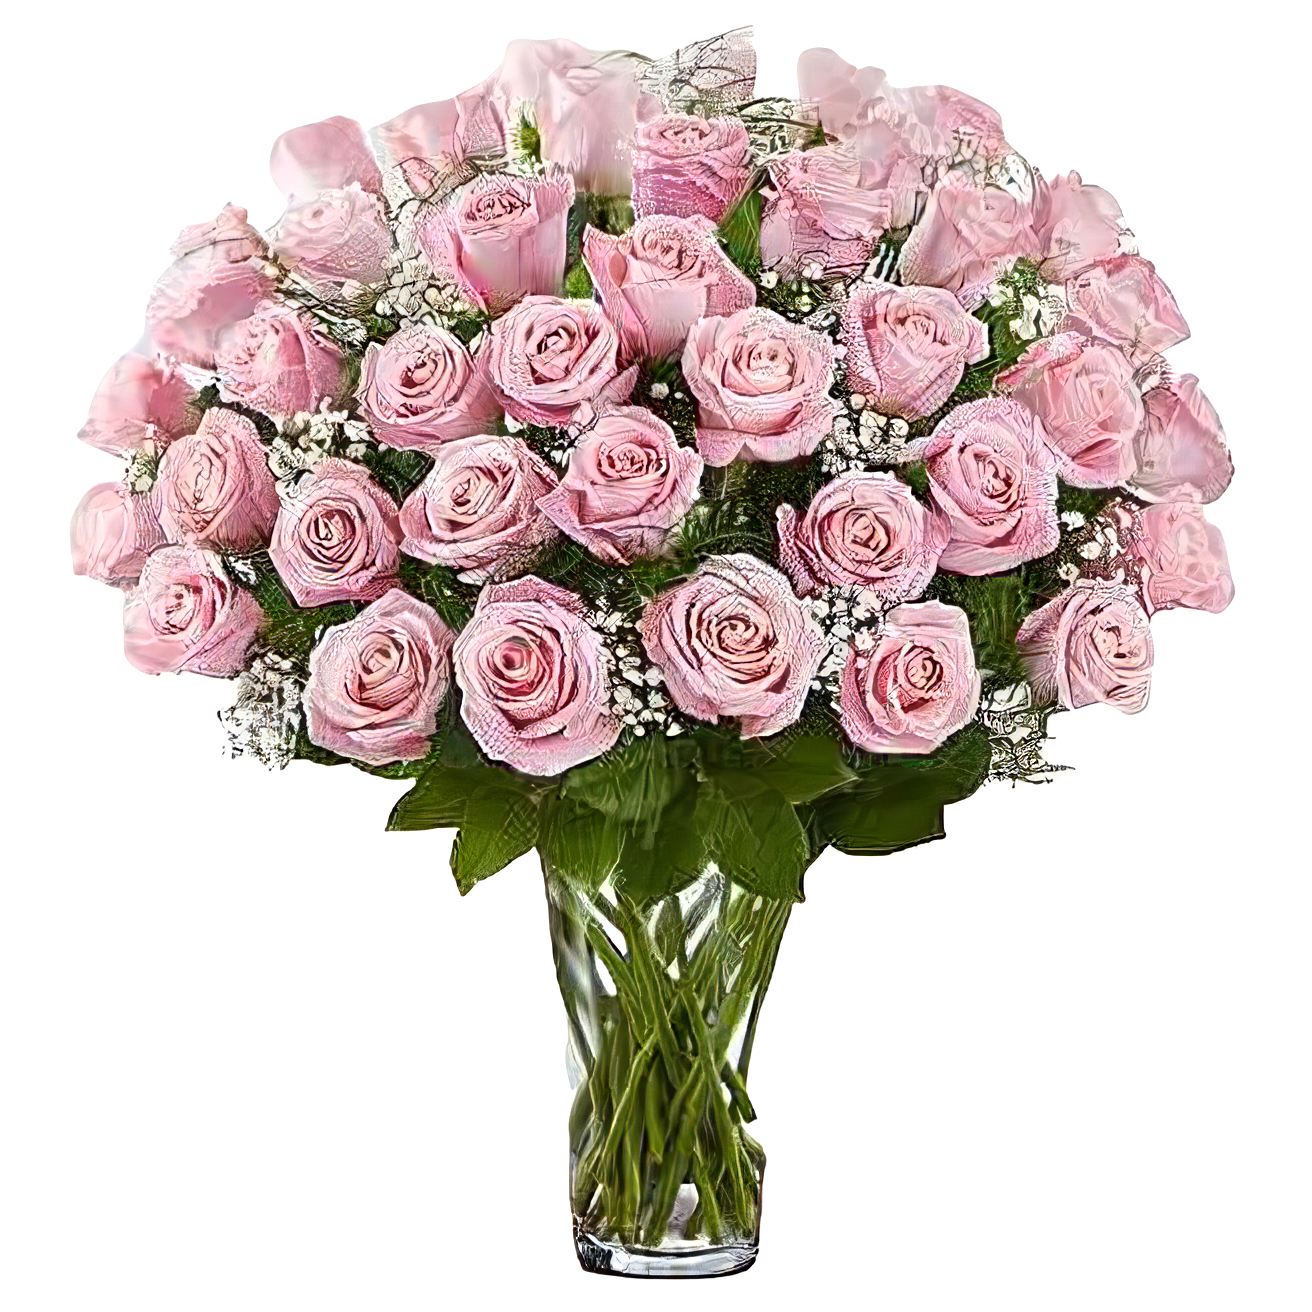 Manhattan Flower Delivery - Premium Long Stem 48 Pink Roses - Roses